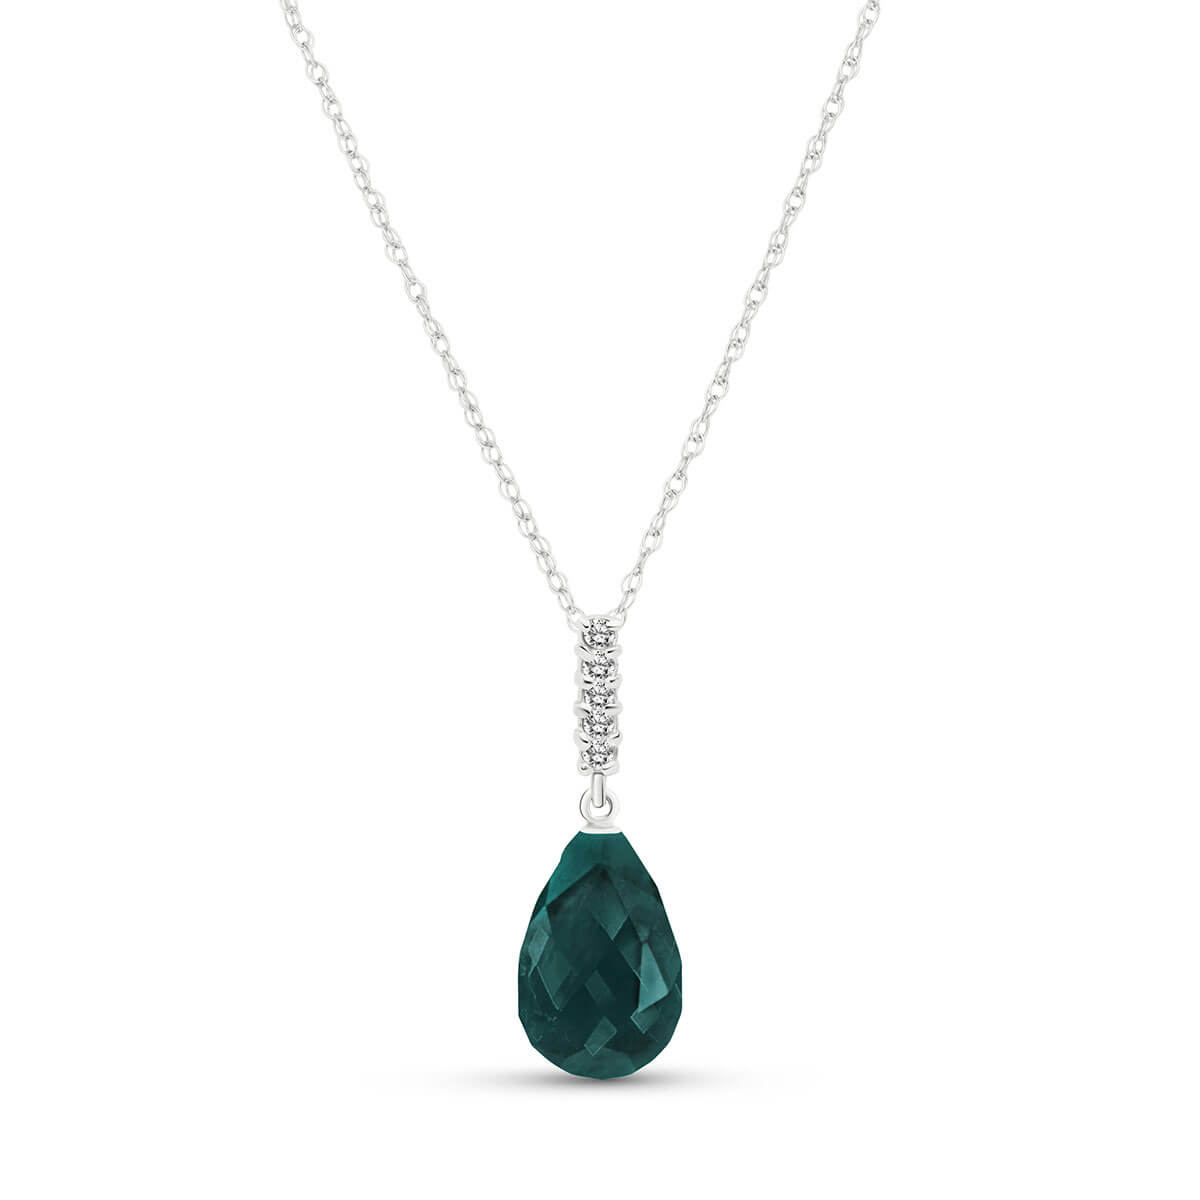 Briolette Cut Emerald Pendant Necklace 8.88 ctw in 9ct White Gold